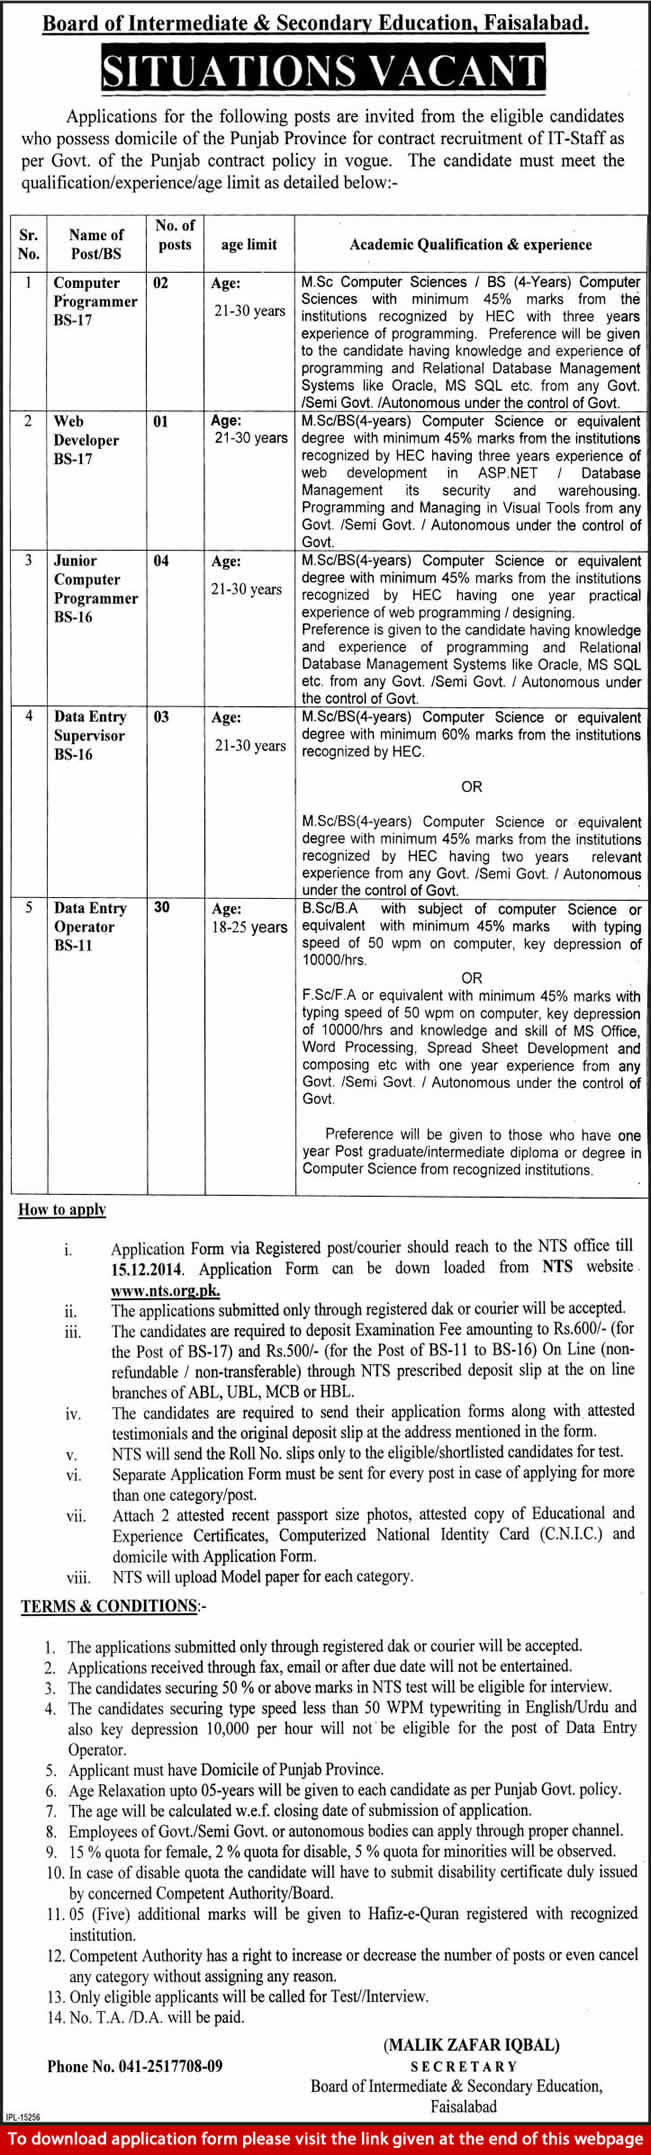 Board of Intermediate and Secondary Education Faisalabad Jobs 2014 November NTS Application Form